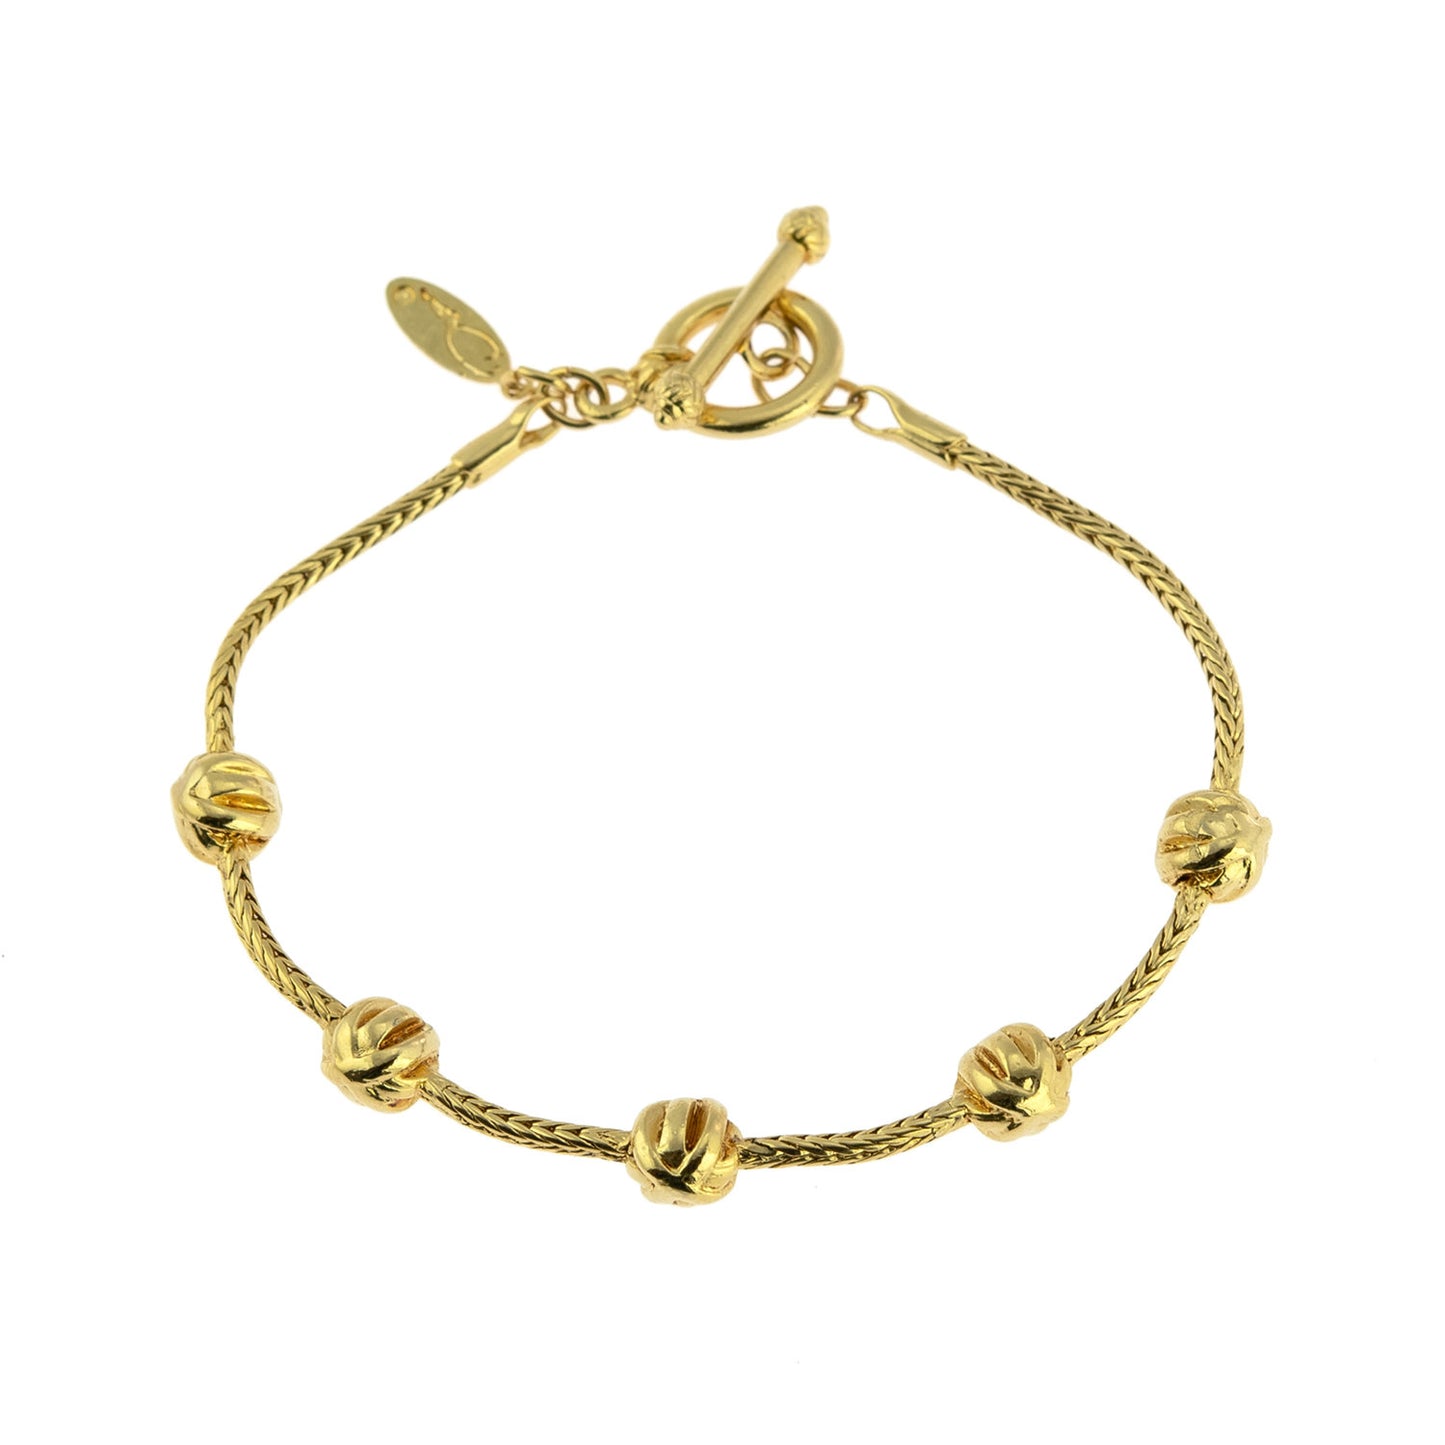 Vintage Bracelet Oscar De La Renta Gold Textured Bead and Chain Bracelet Women OSB-545 Antique Bracelet Jewelry